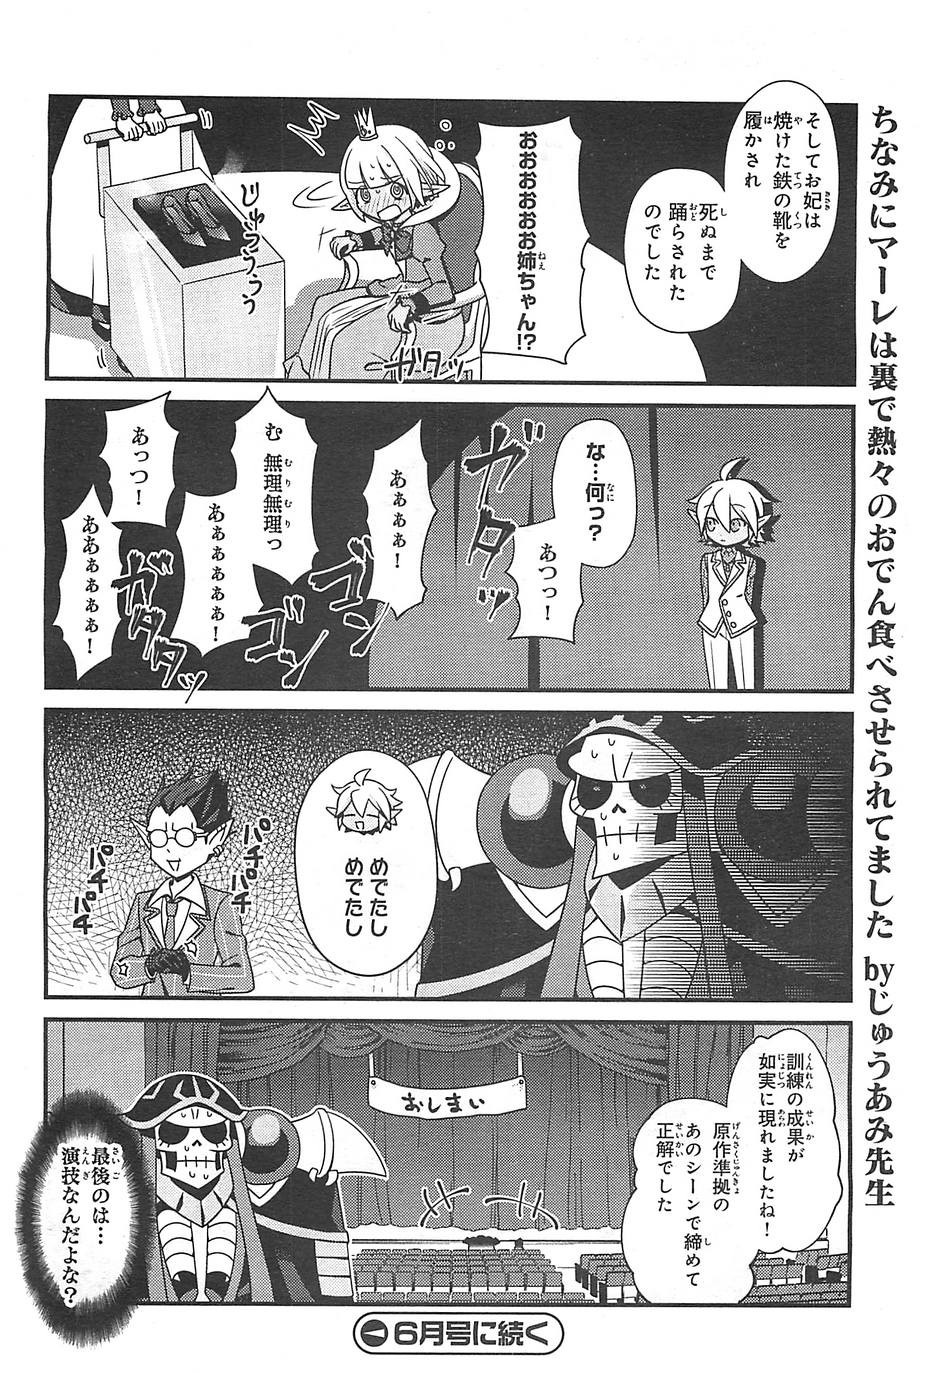 Overlord-Fushisha-no-Oh - Chapter 03 - Page 20